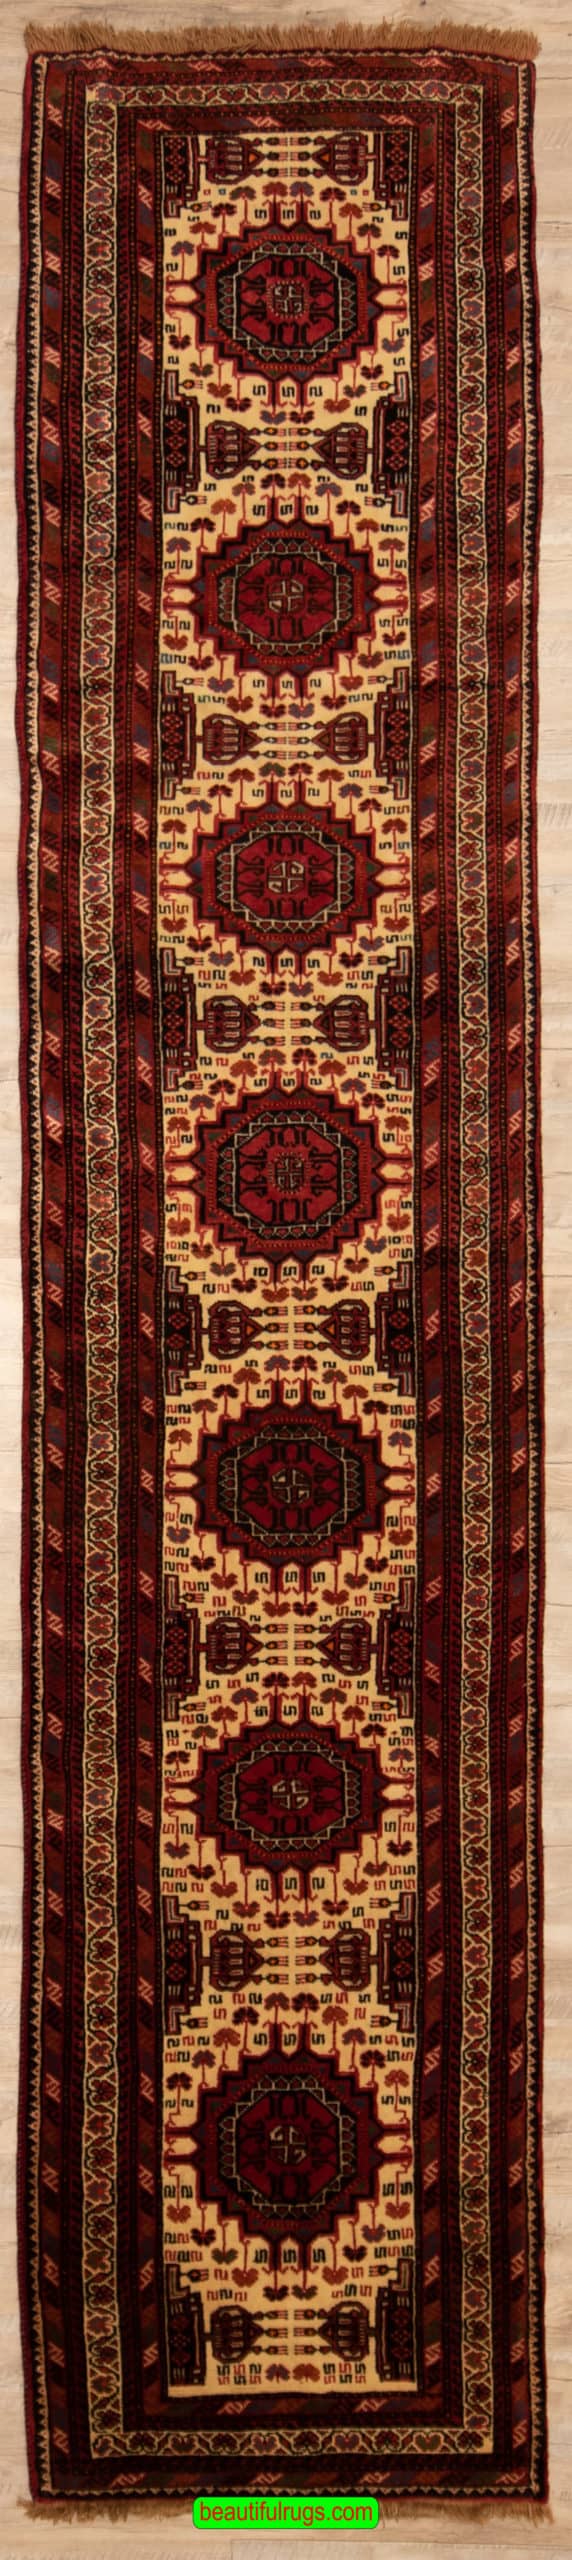 Hand Woven Persian Baluchi Hallway Runner Rug, Tribal Design Rug